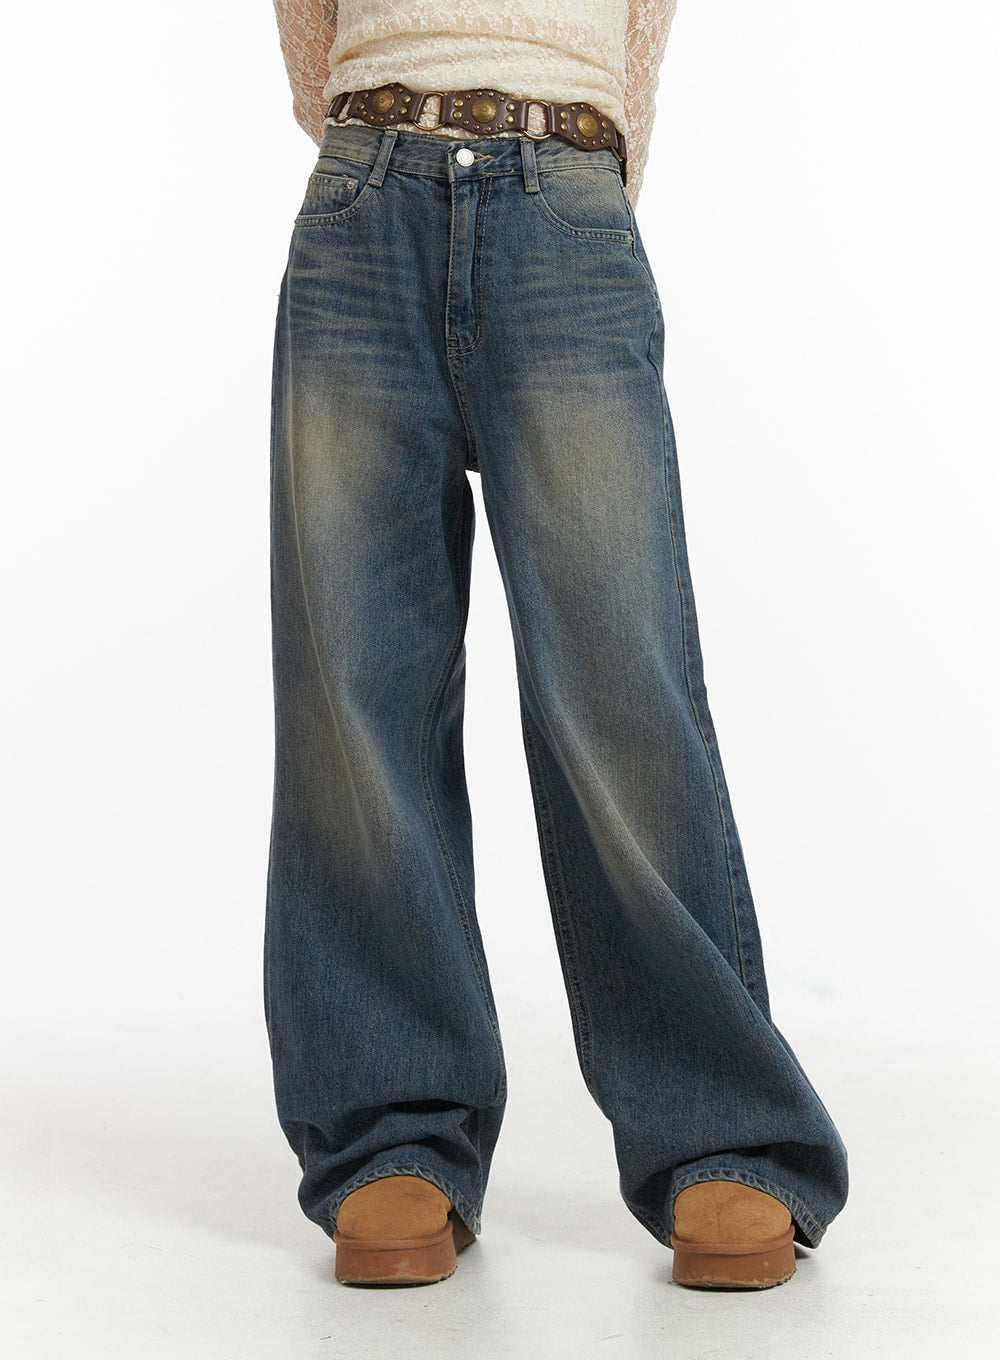 wide-leg-denim-trousers-cj415